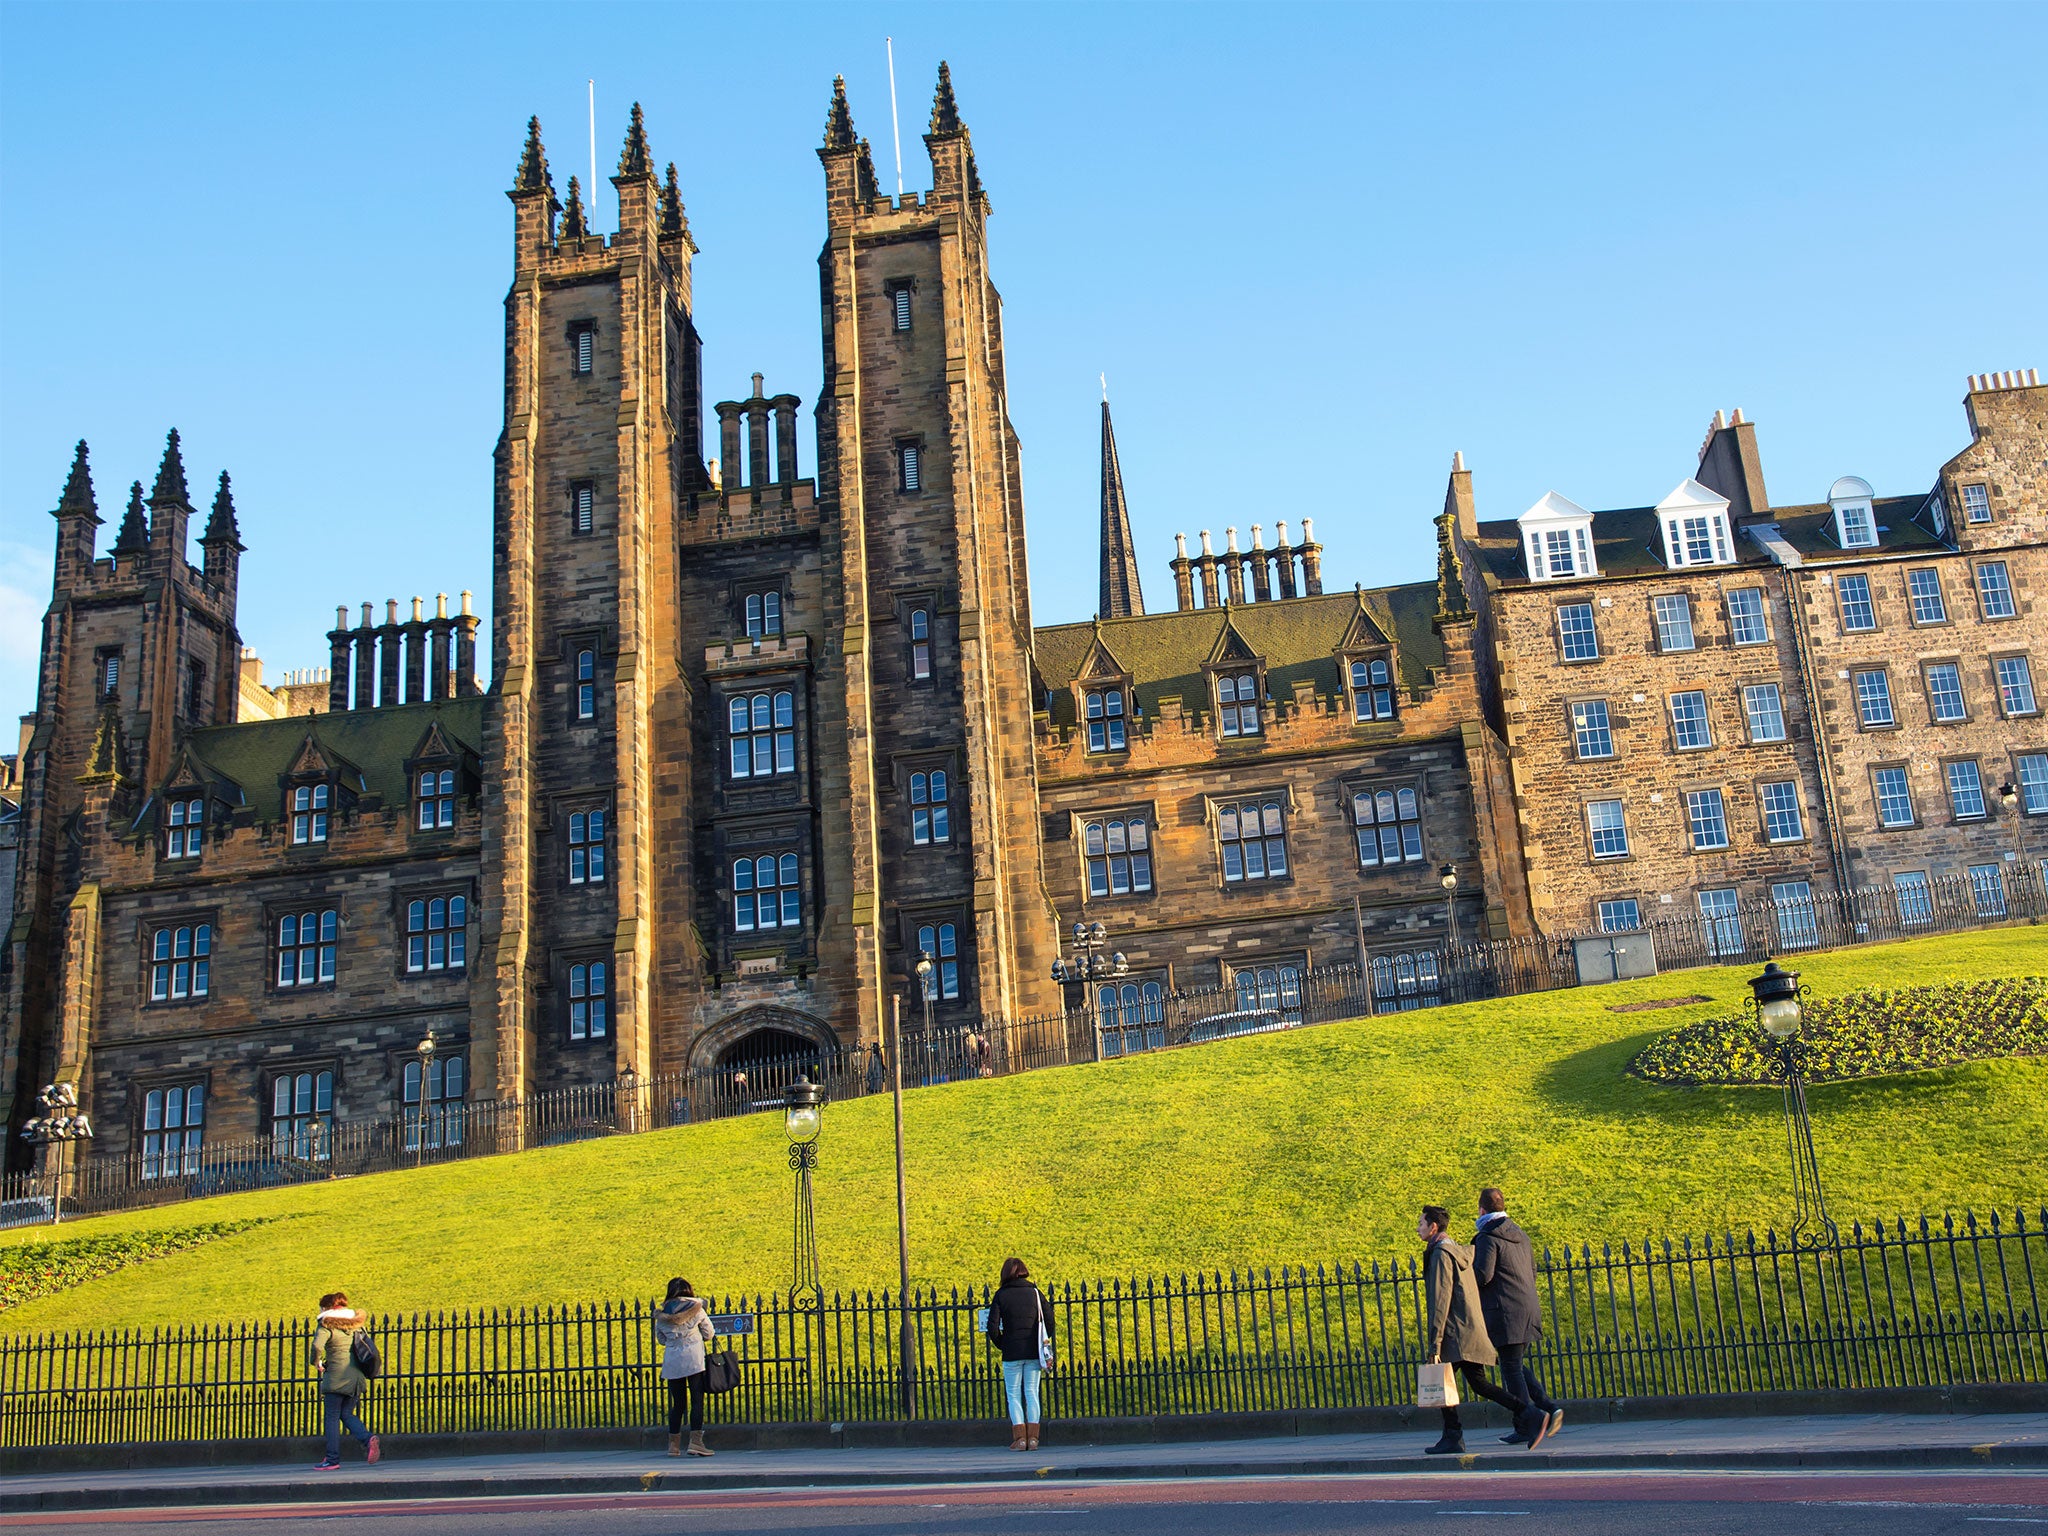 Edinburgh University graduation fashion advice article criticised for